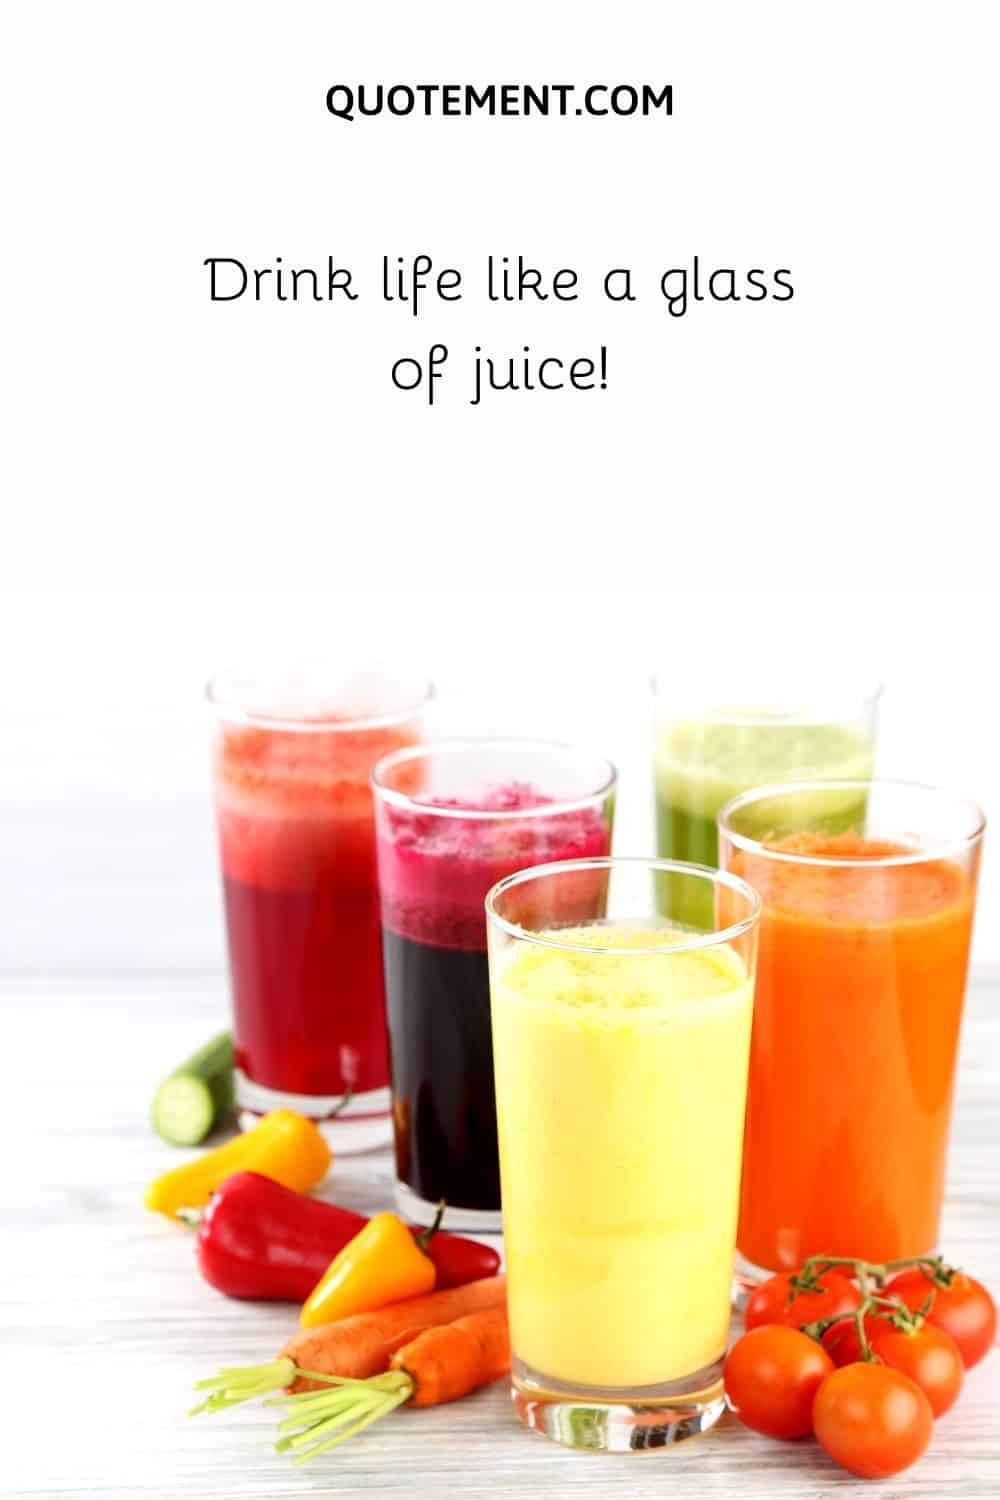 Drink life like a glass of juice